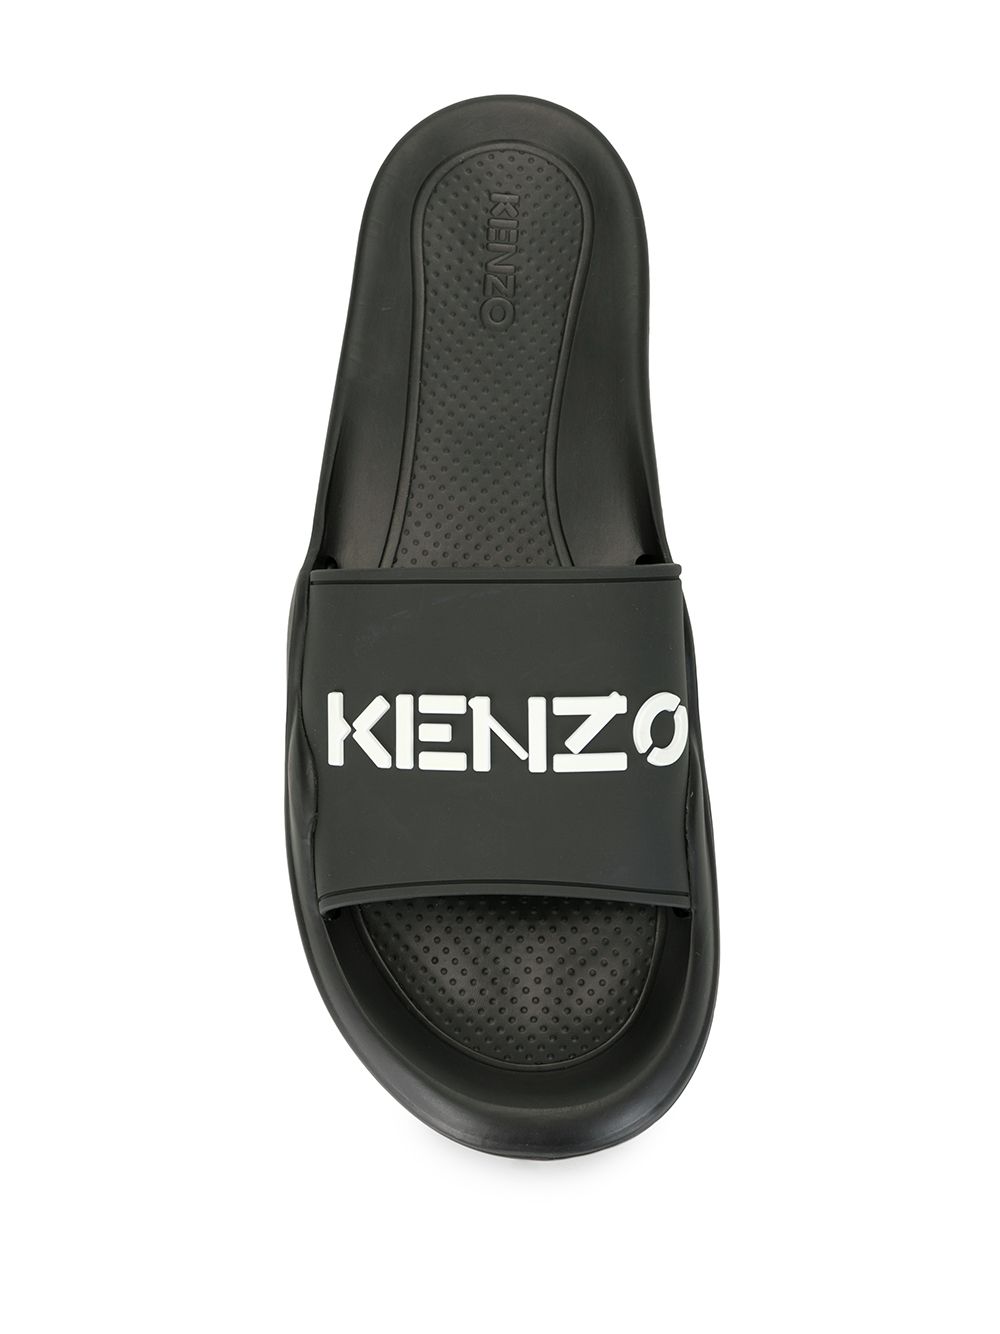 kenzo sliders sale